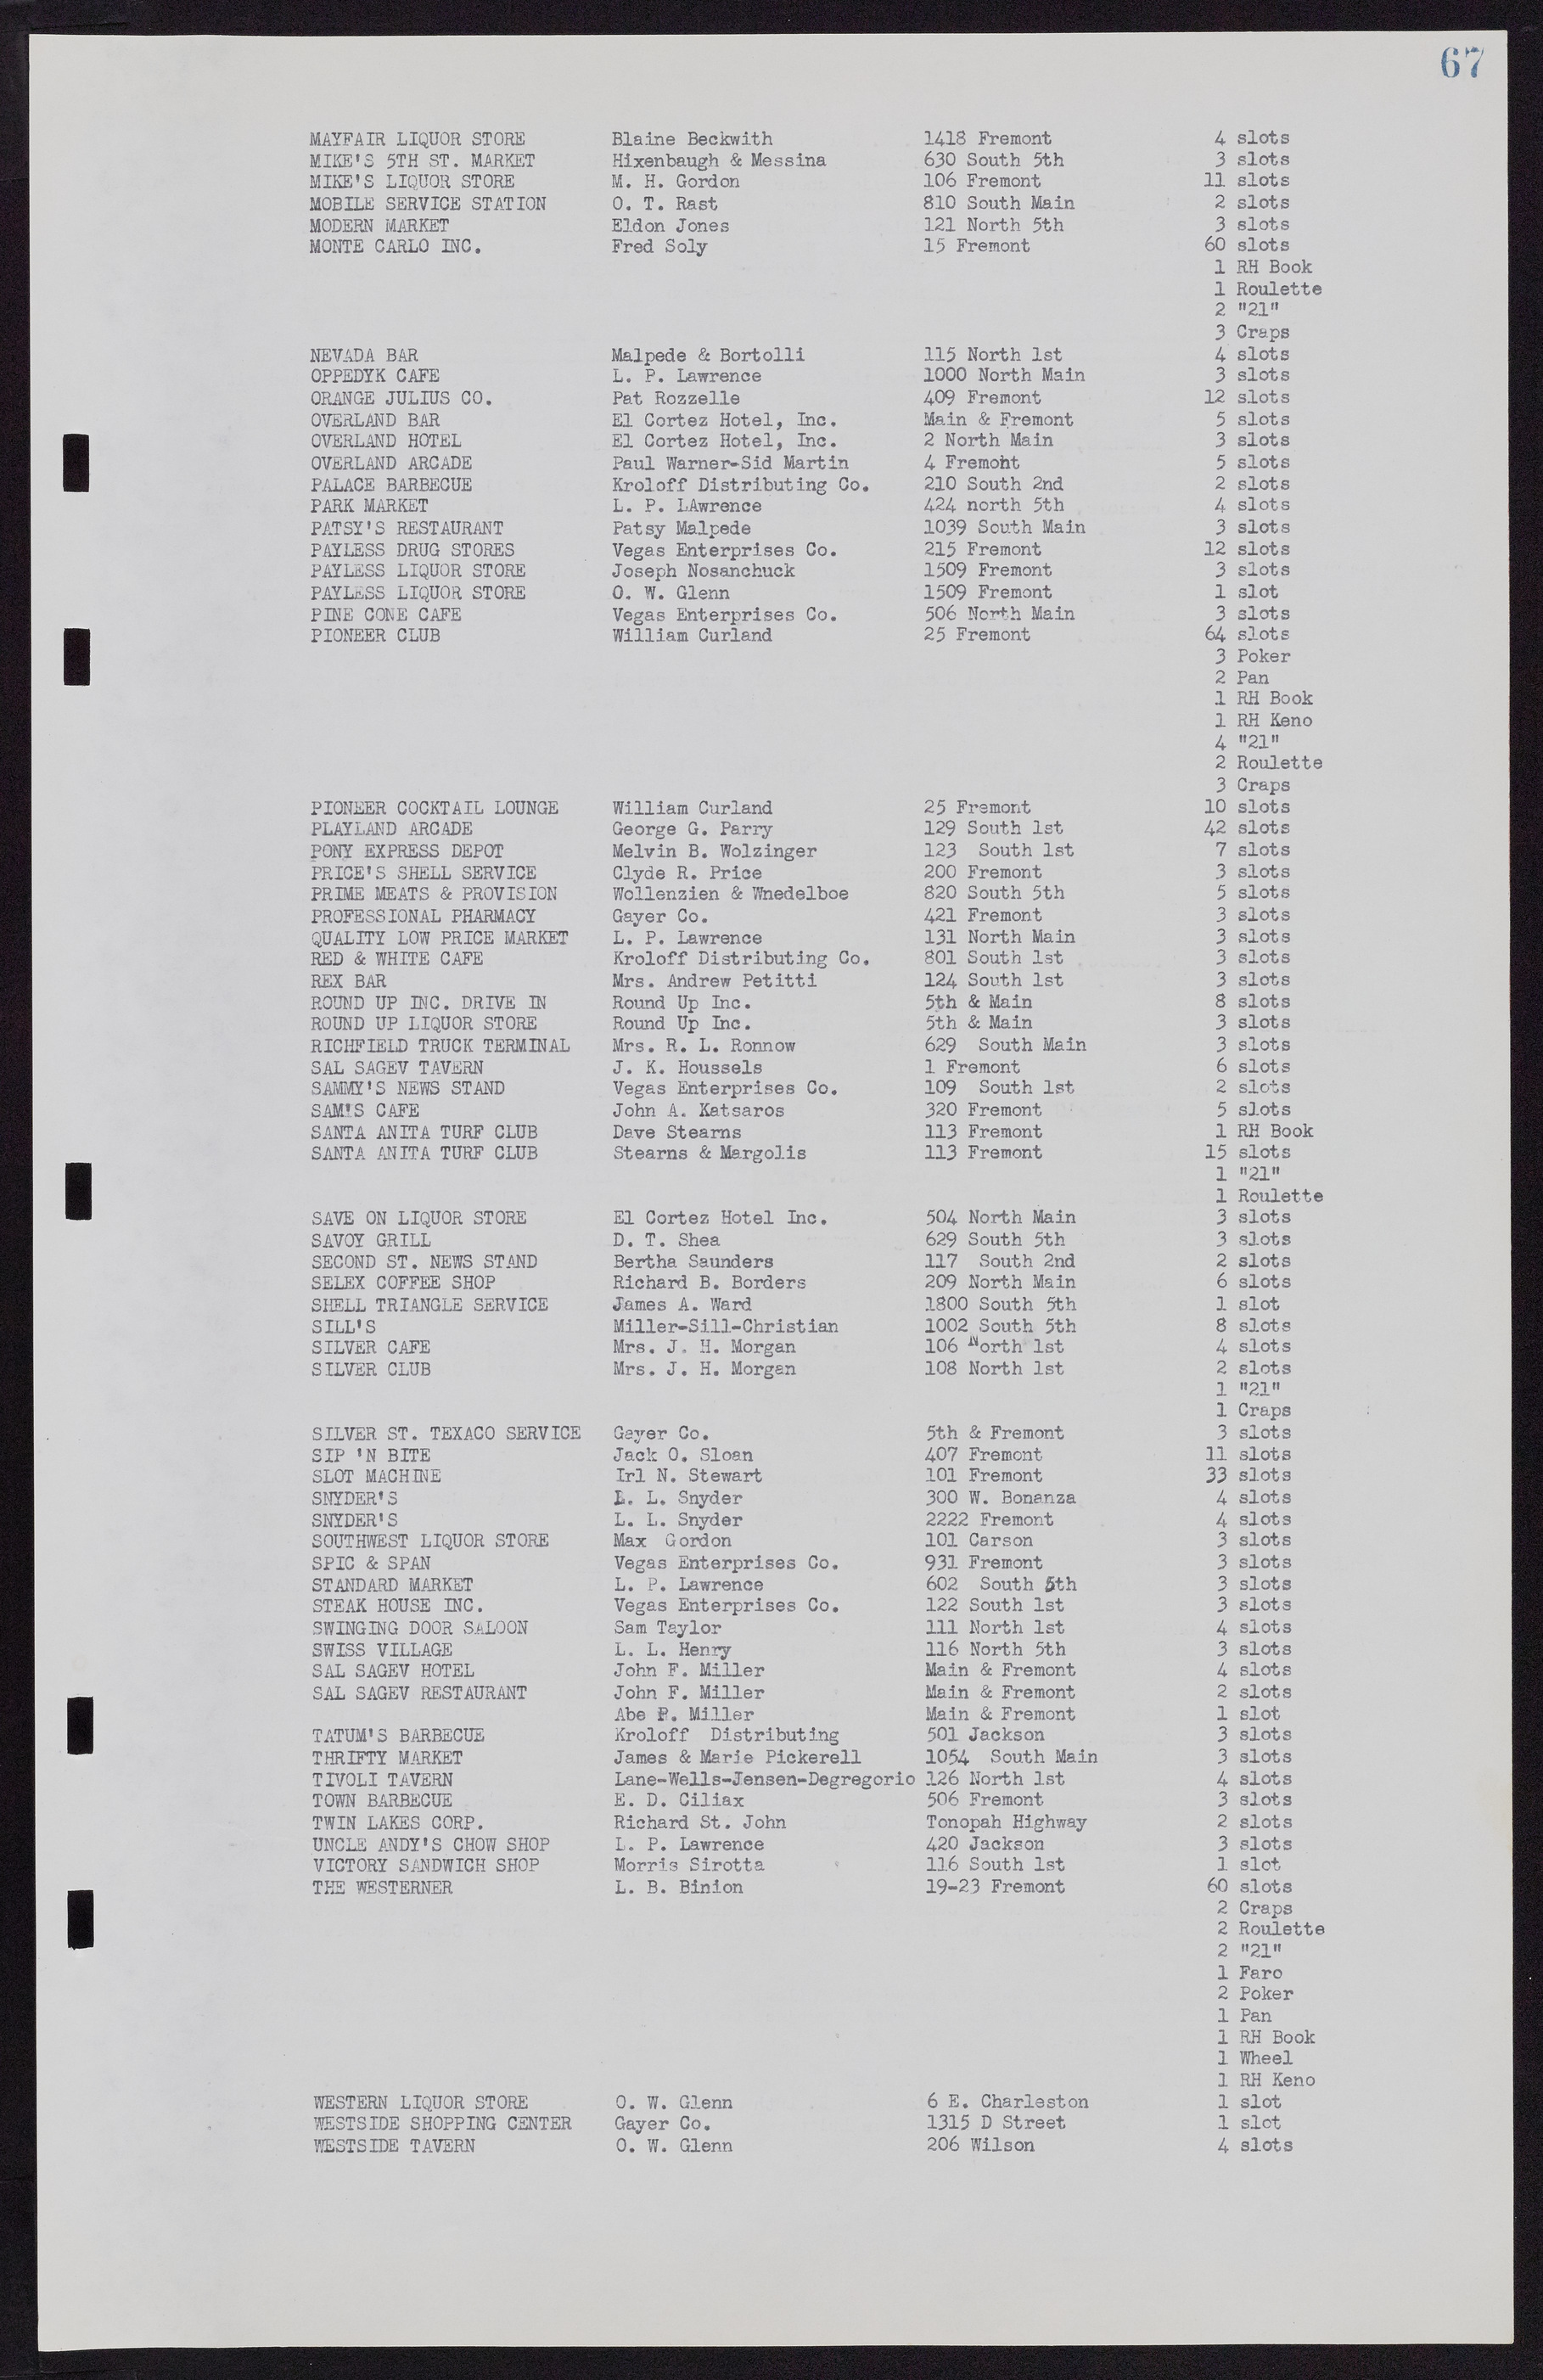 Las Vegas City Commission Minutes, November 7, 1949 to May 21, 1952, lvc000007-75